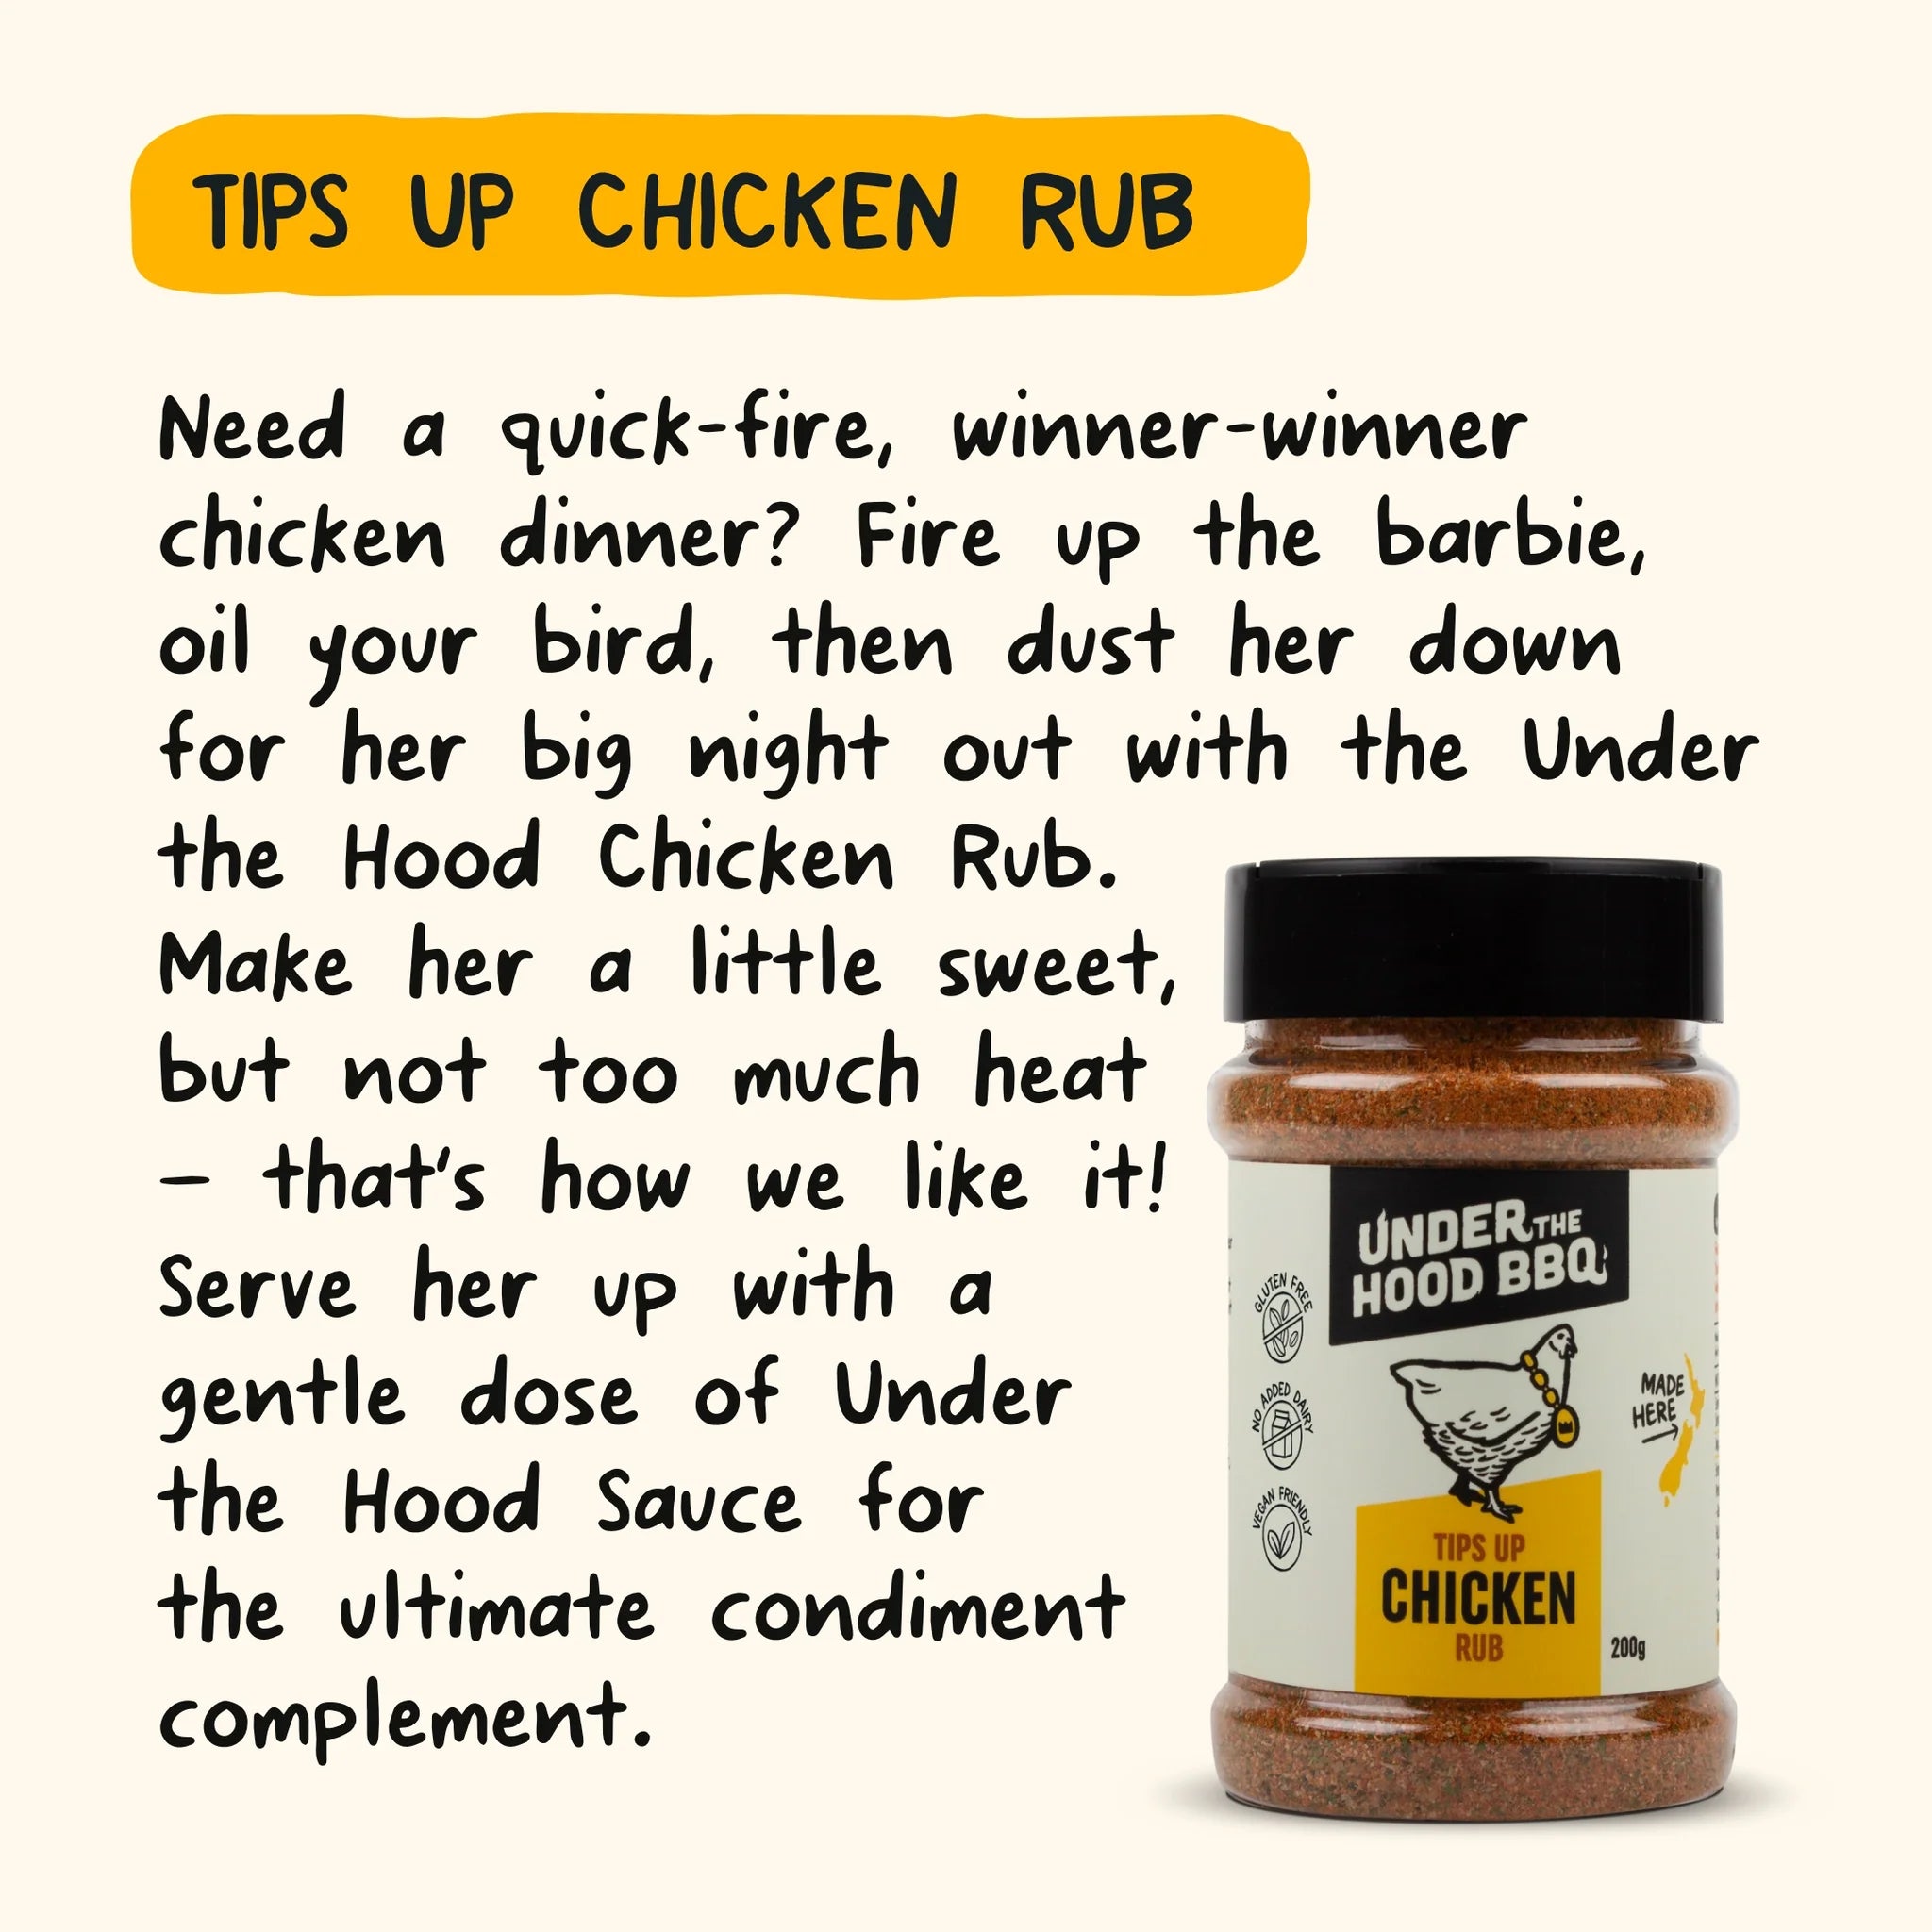 Under the Hood BBQ Tips Up Chicken Rub